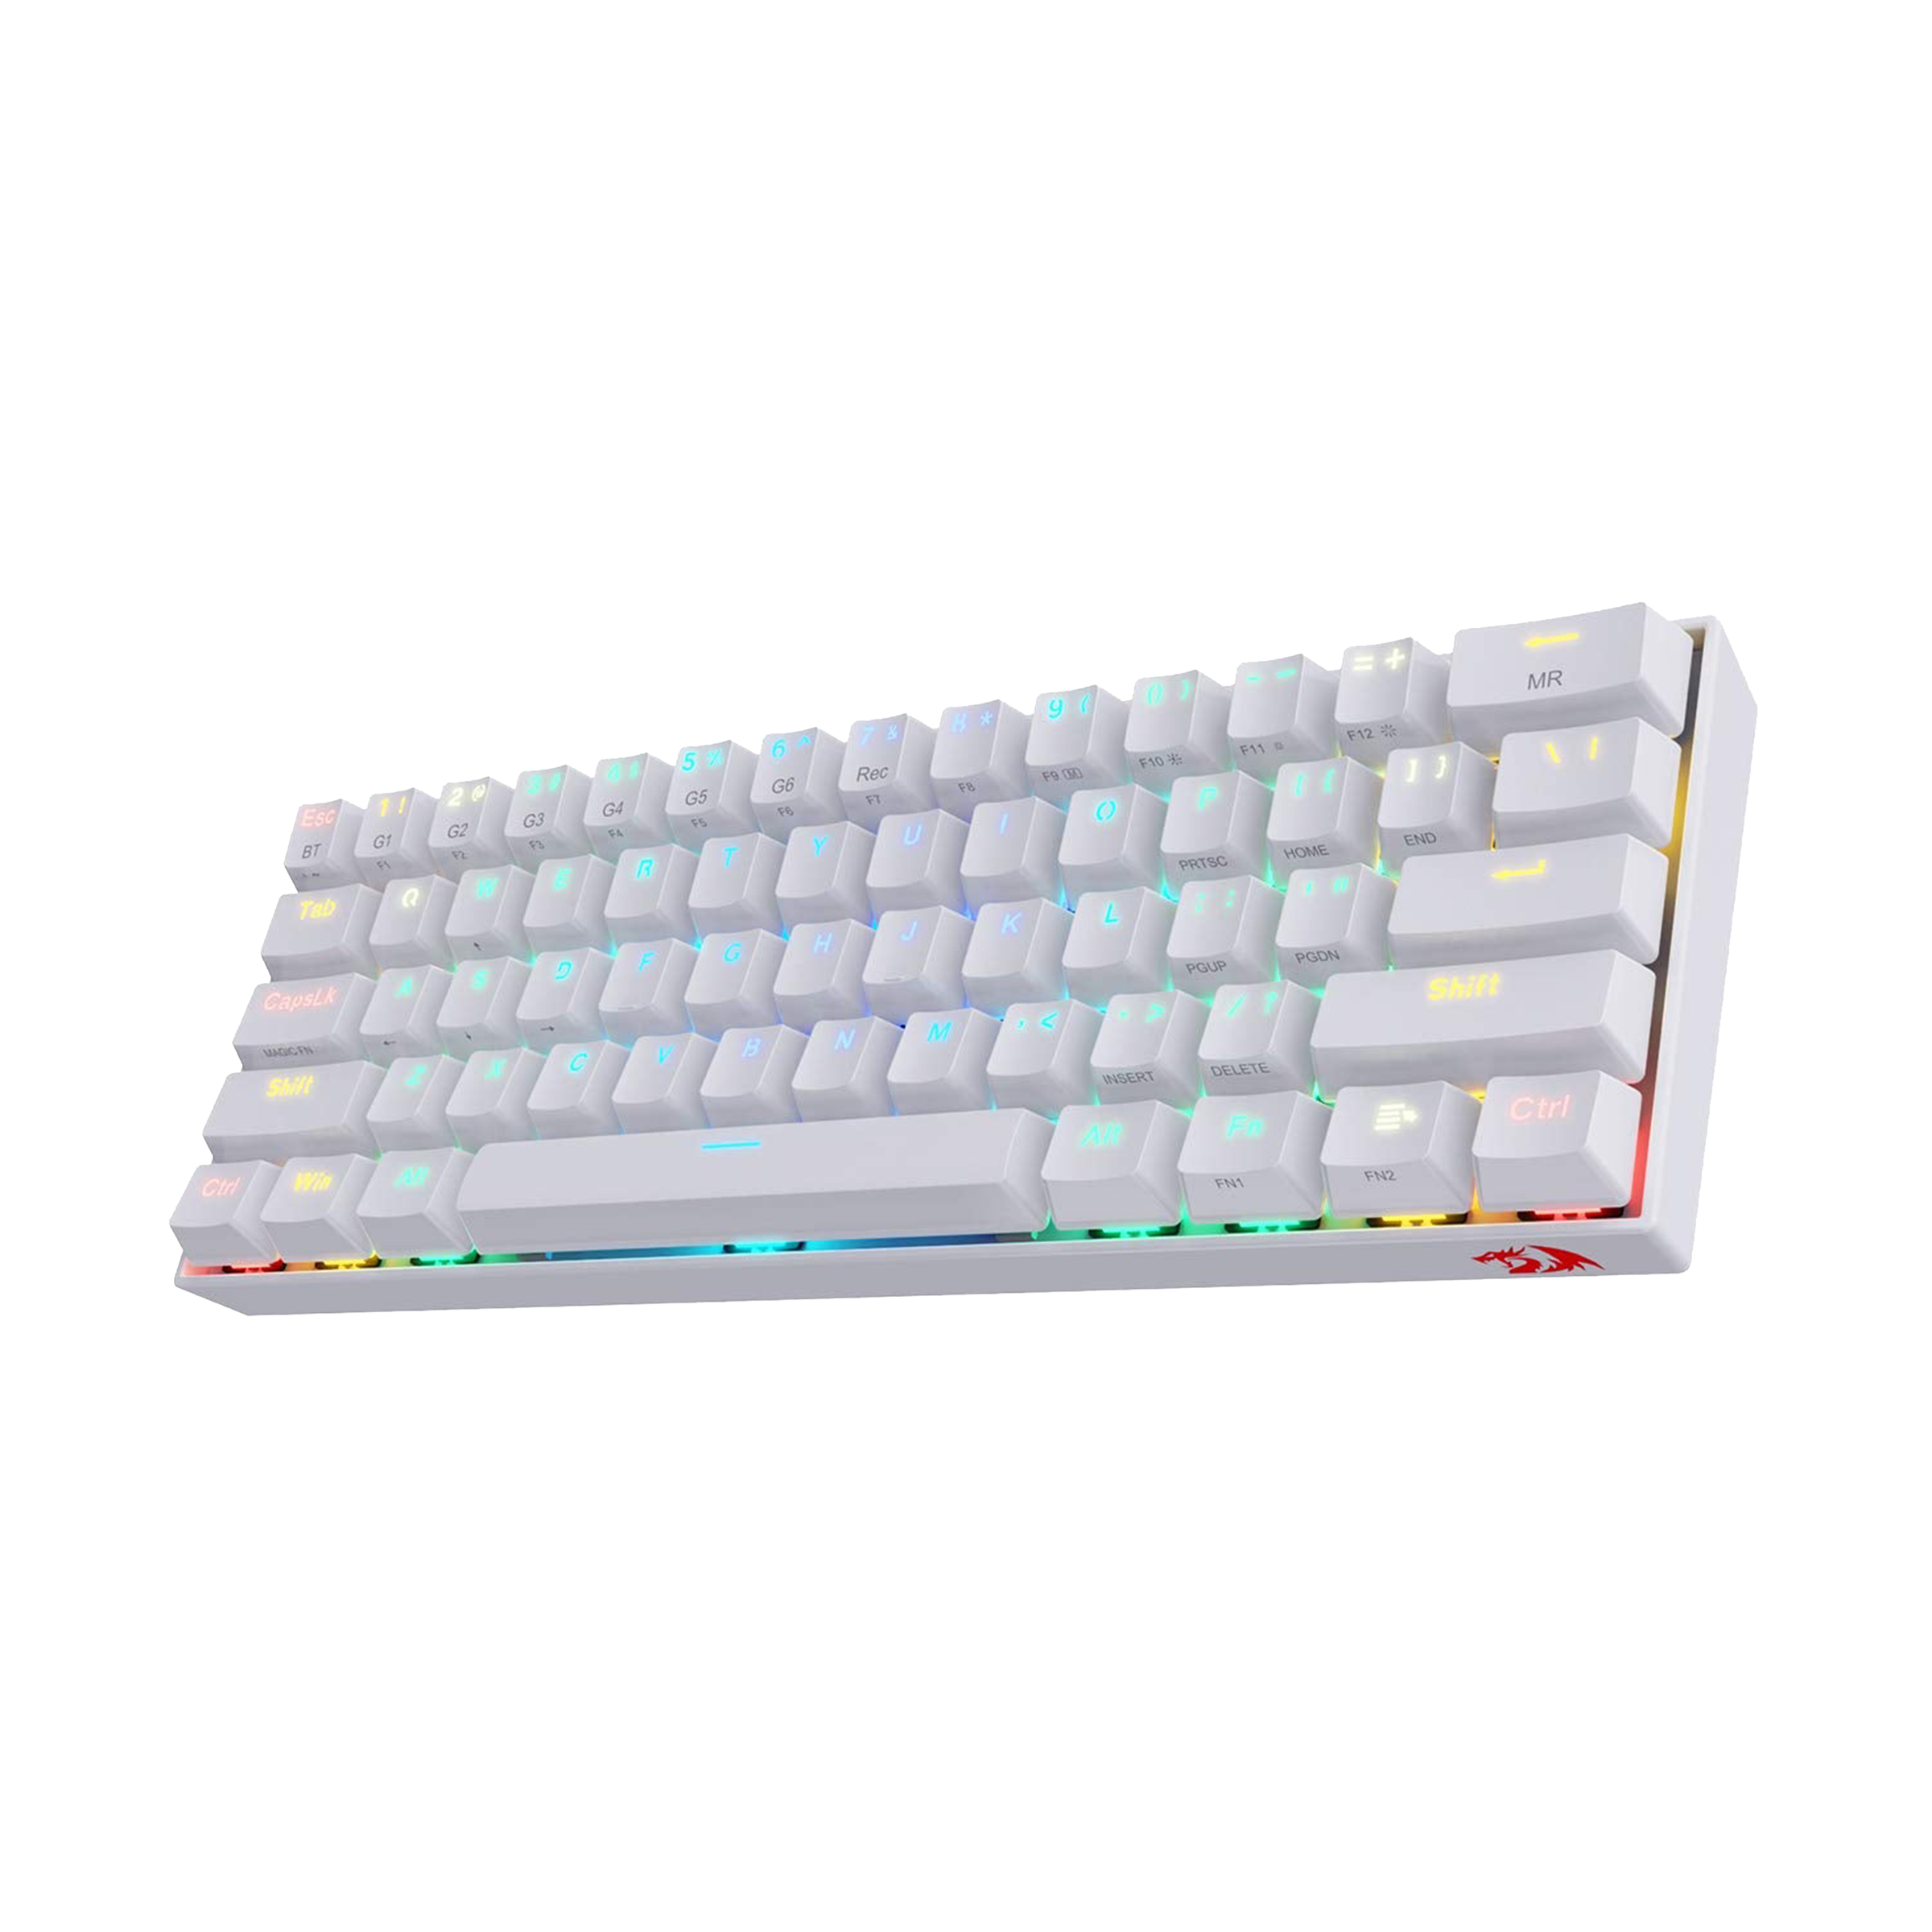 Redragon Draconic K530 Wired/Wireless Keyboard (RGB Backlight Brown Switch, White)